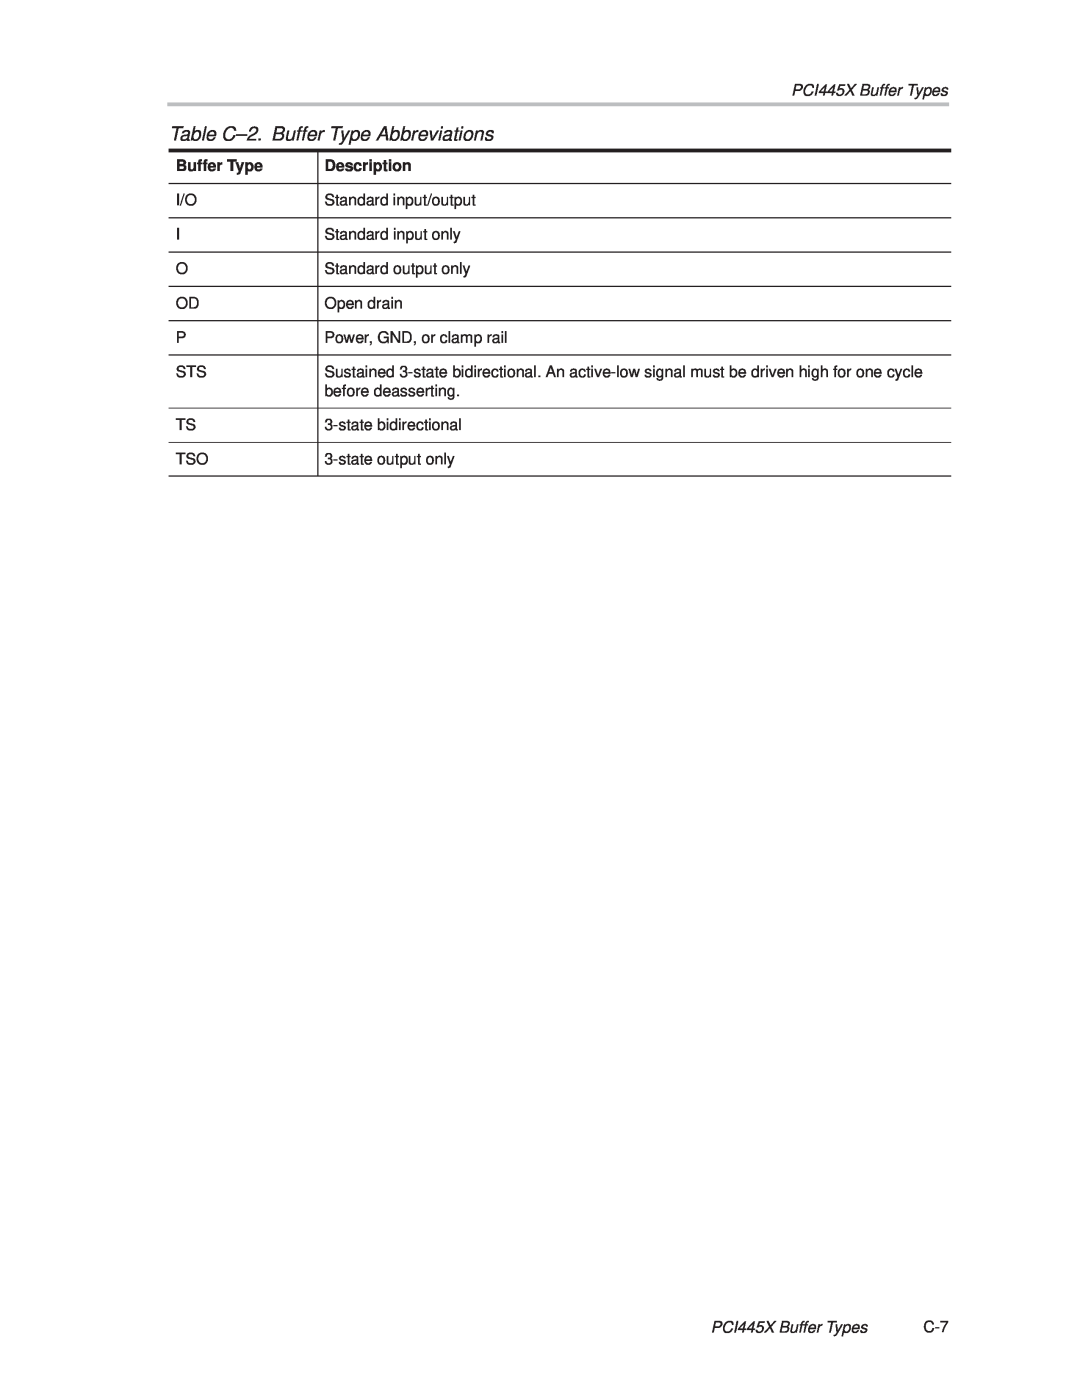 Texas Instruments manual Table C±2. Buffer Type Abbreviations, PCI445X Buffer Types, Description 